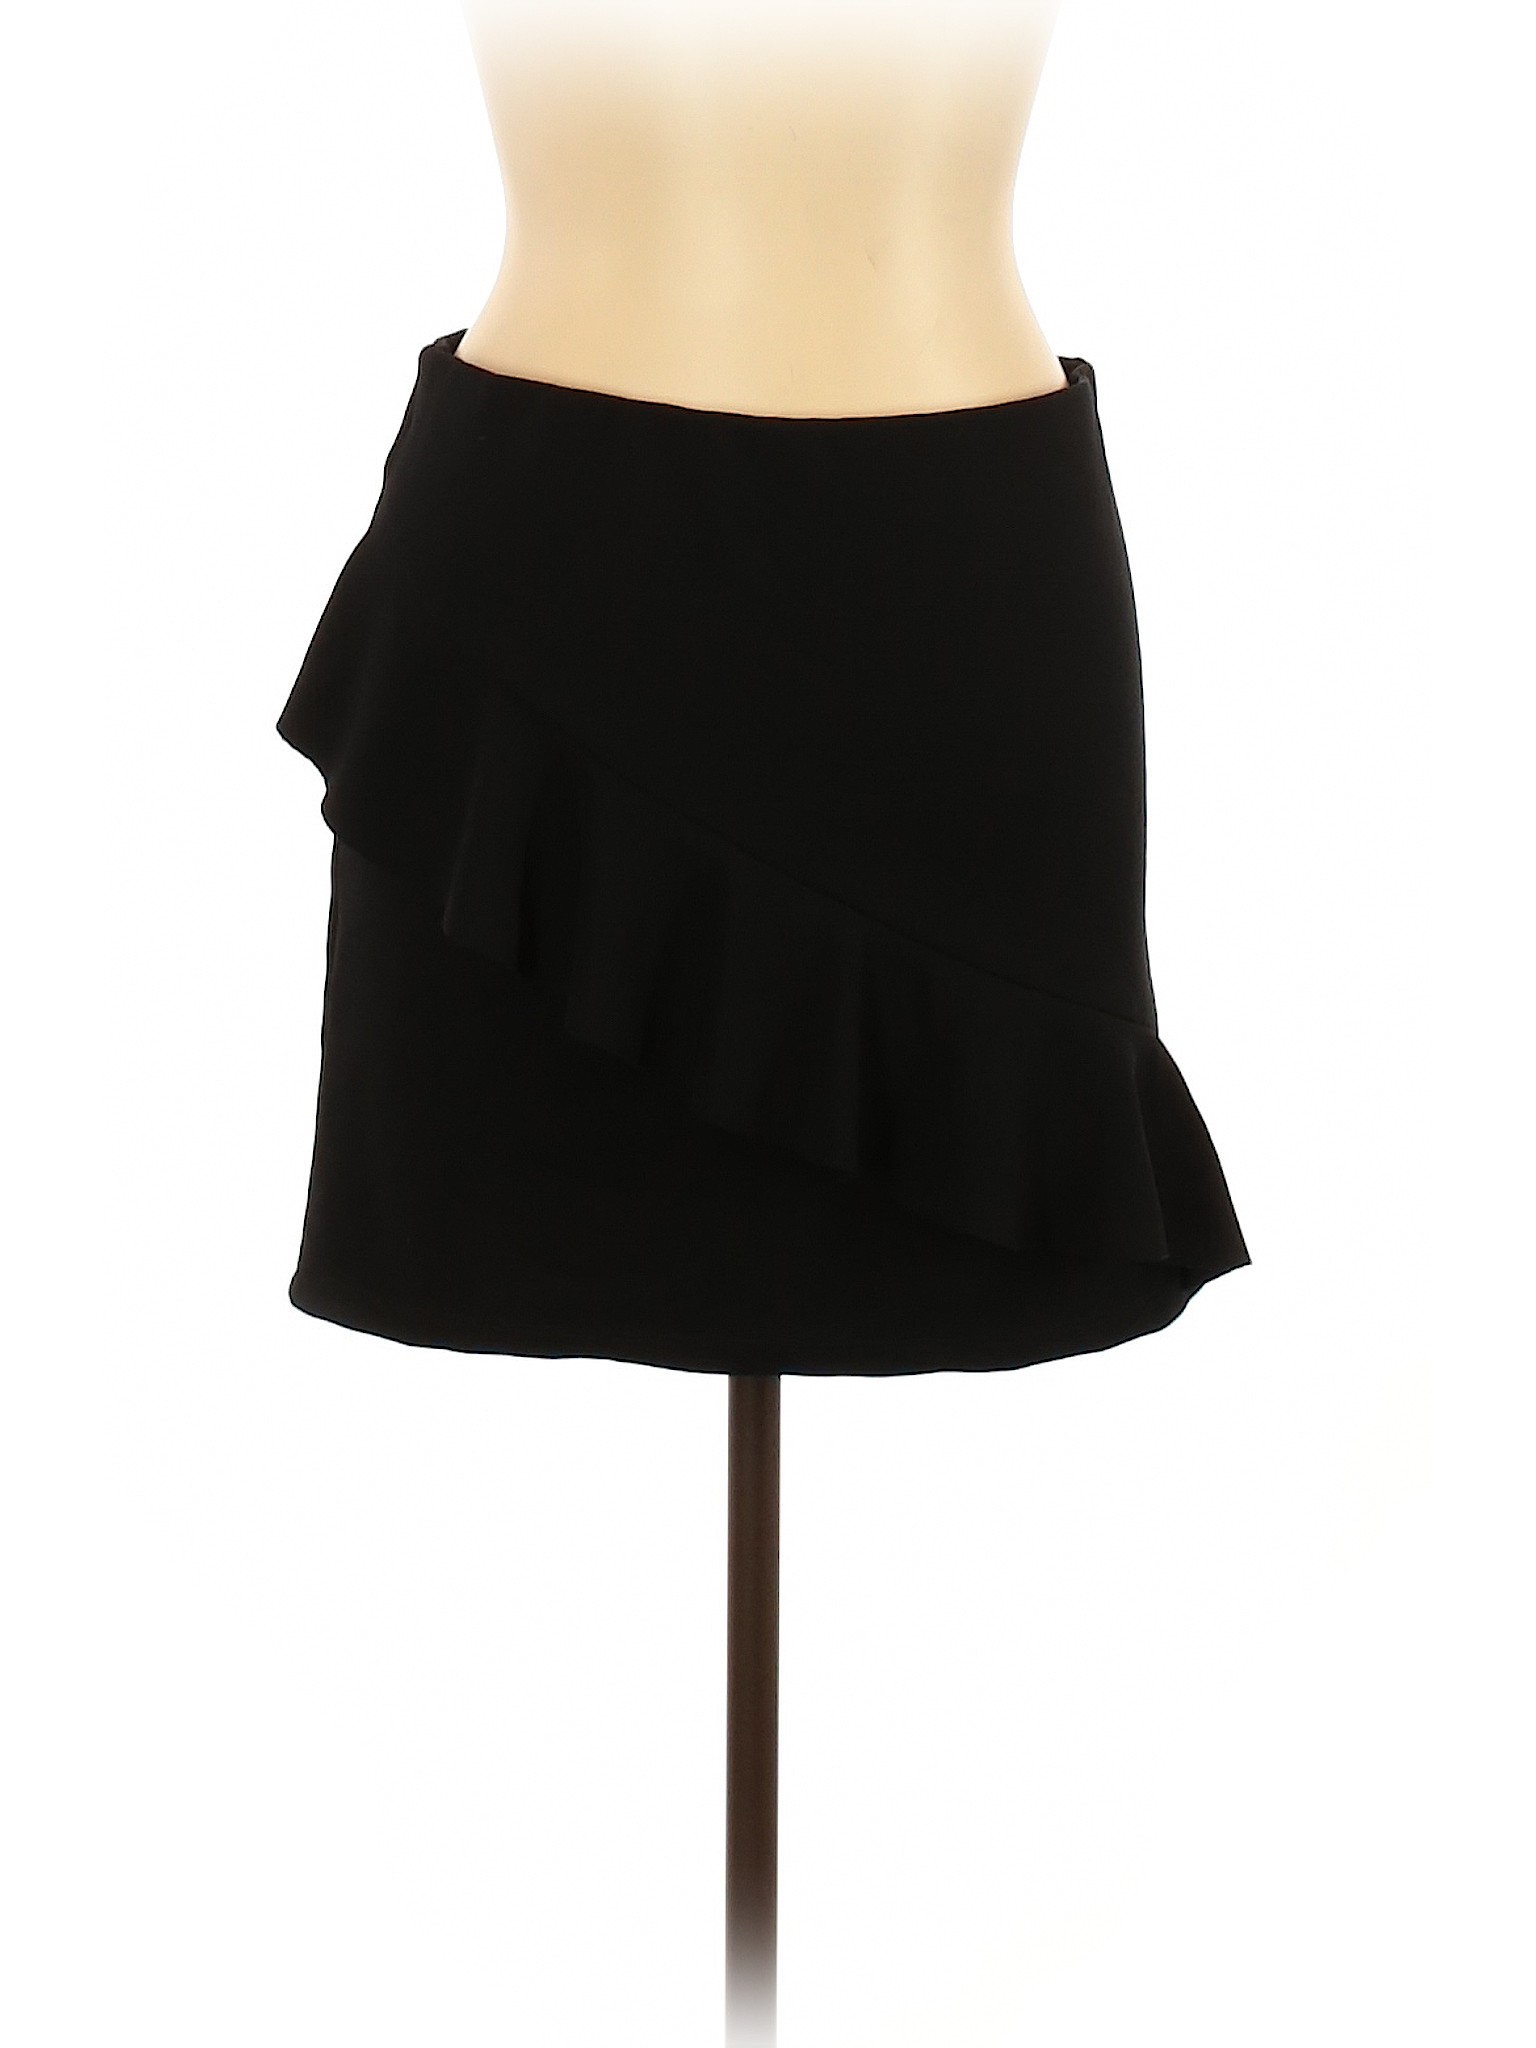 Trafaluc by Zara Women Black Casual Skirt L | eBay